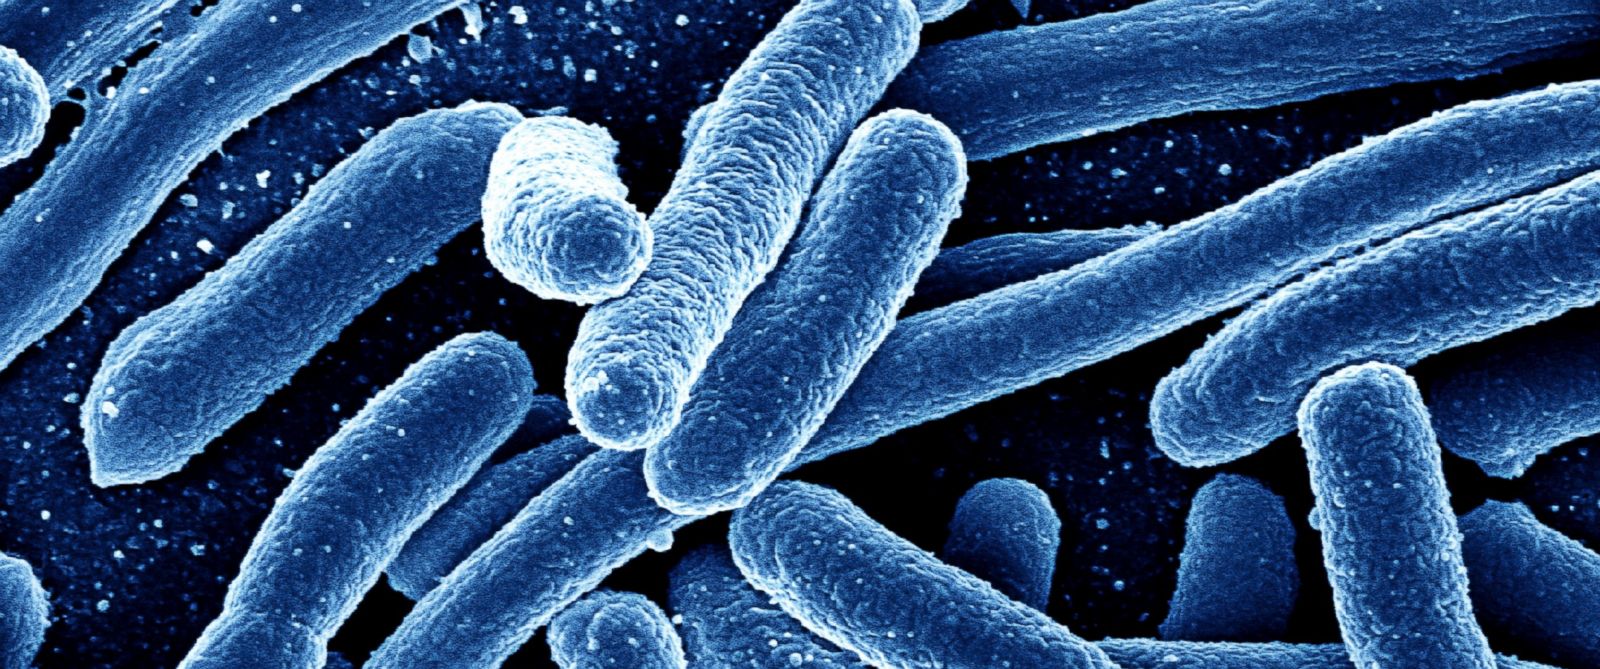 Image: Bacteria may travel around the world using “air bridges,” explaining how superbugs share genes